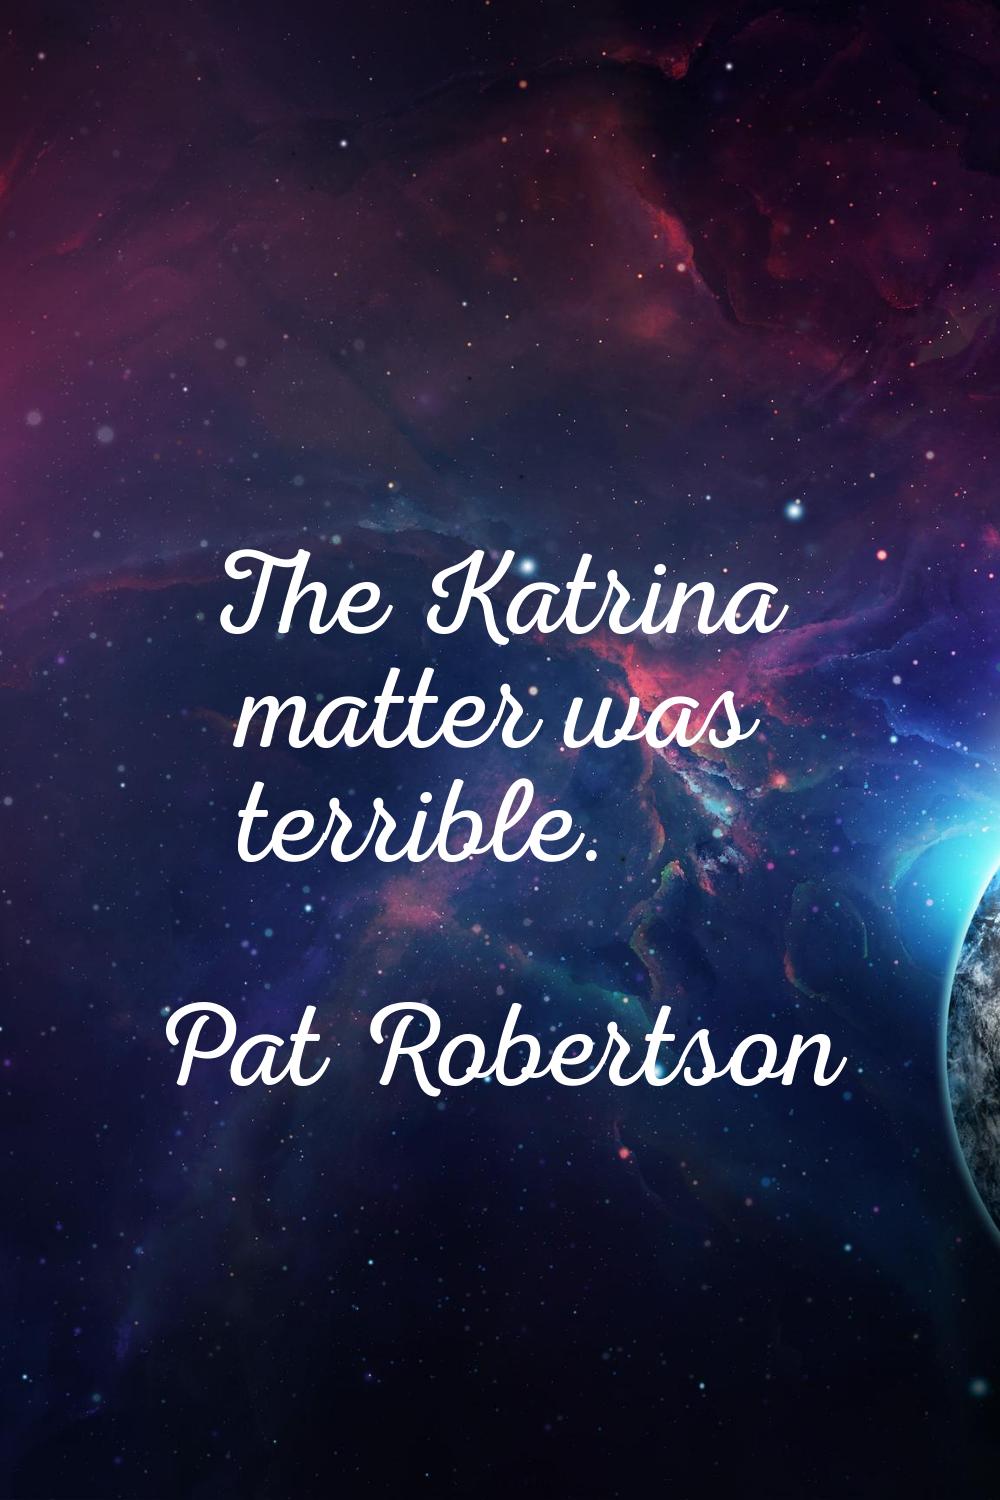 The Katrina matter was terrible.